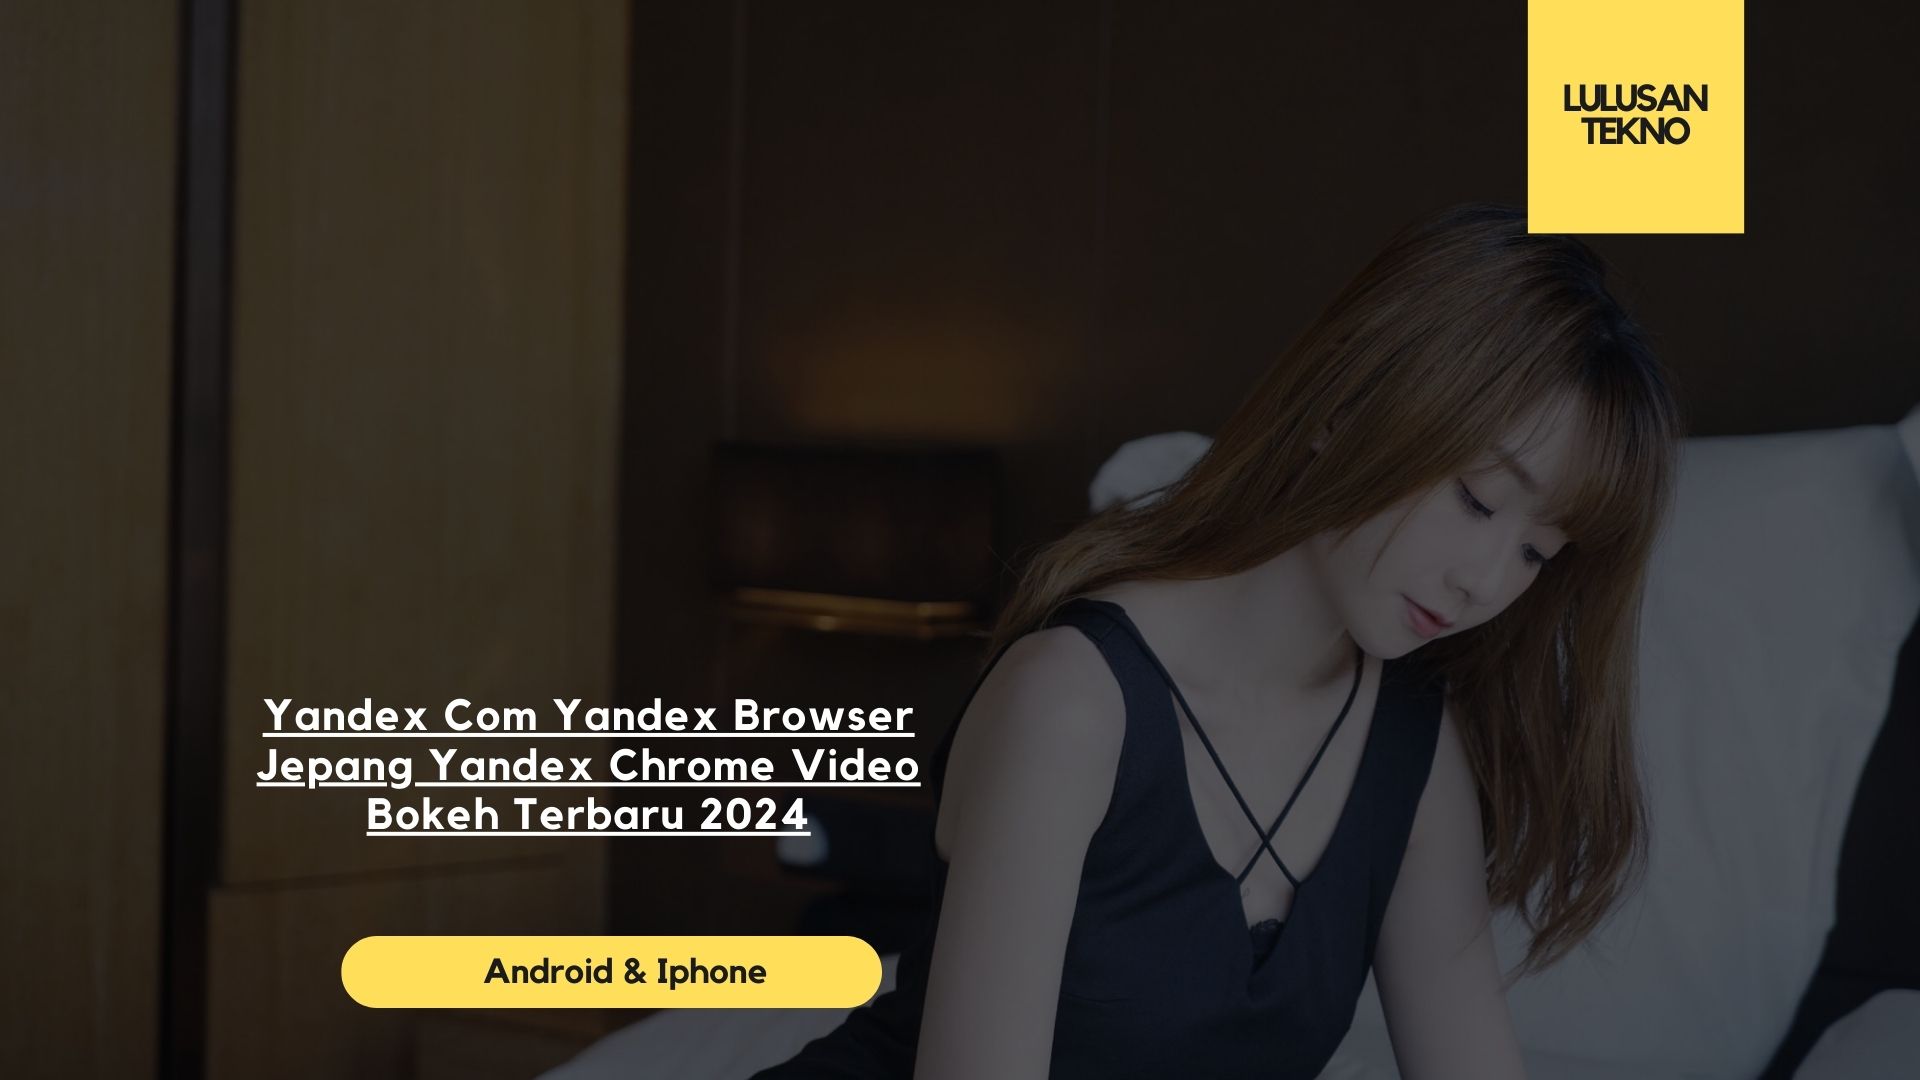 Yandex Com Yandex Browser Jepang Yandex Chrome Video Bokeh Terbaru 2024